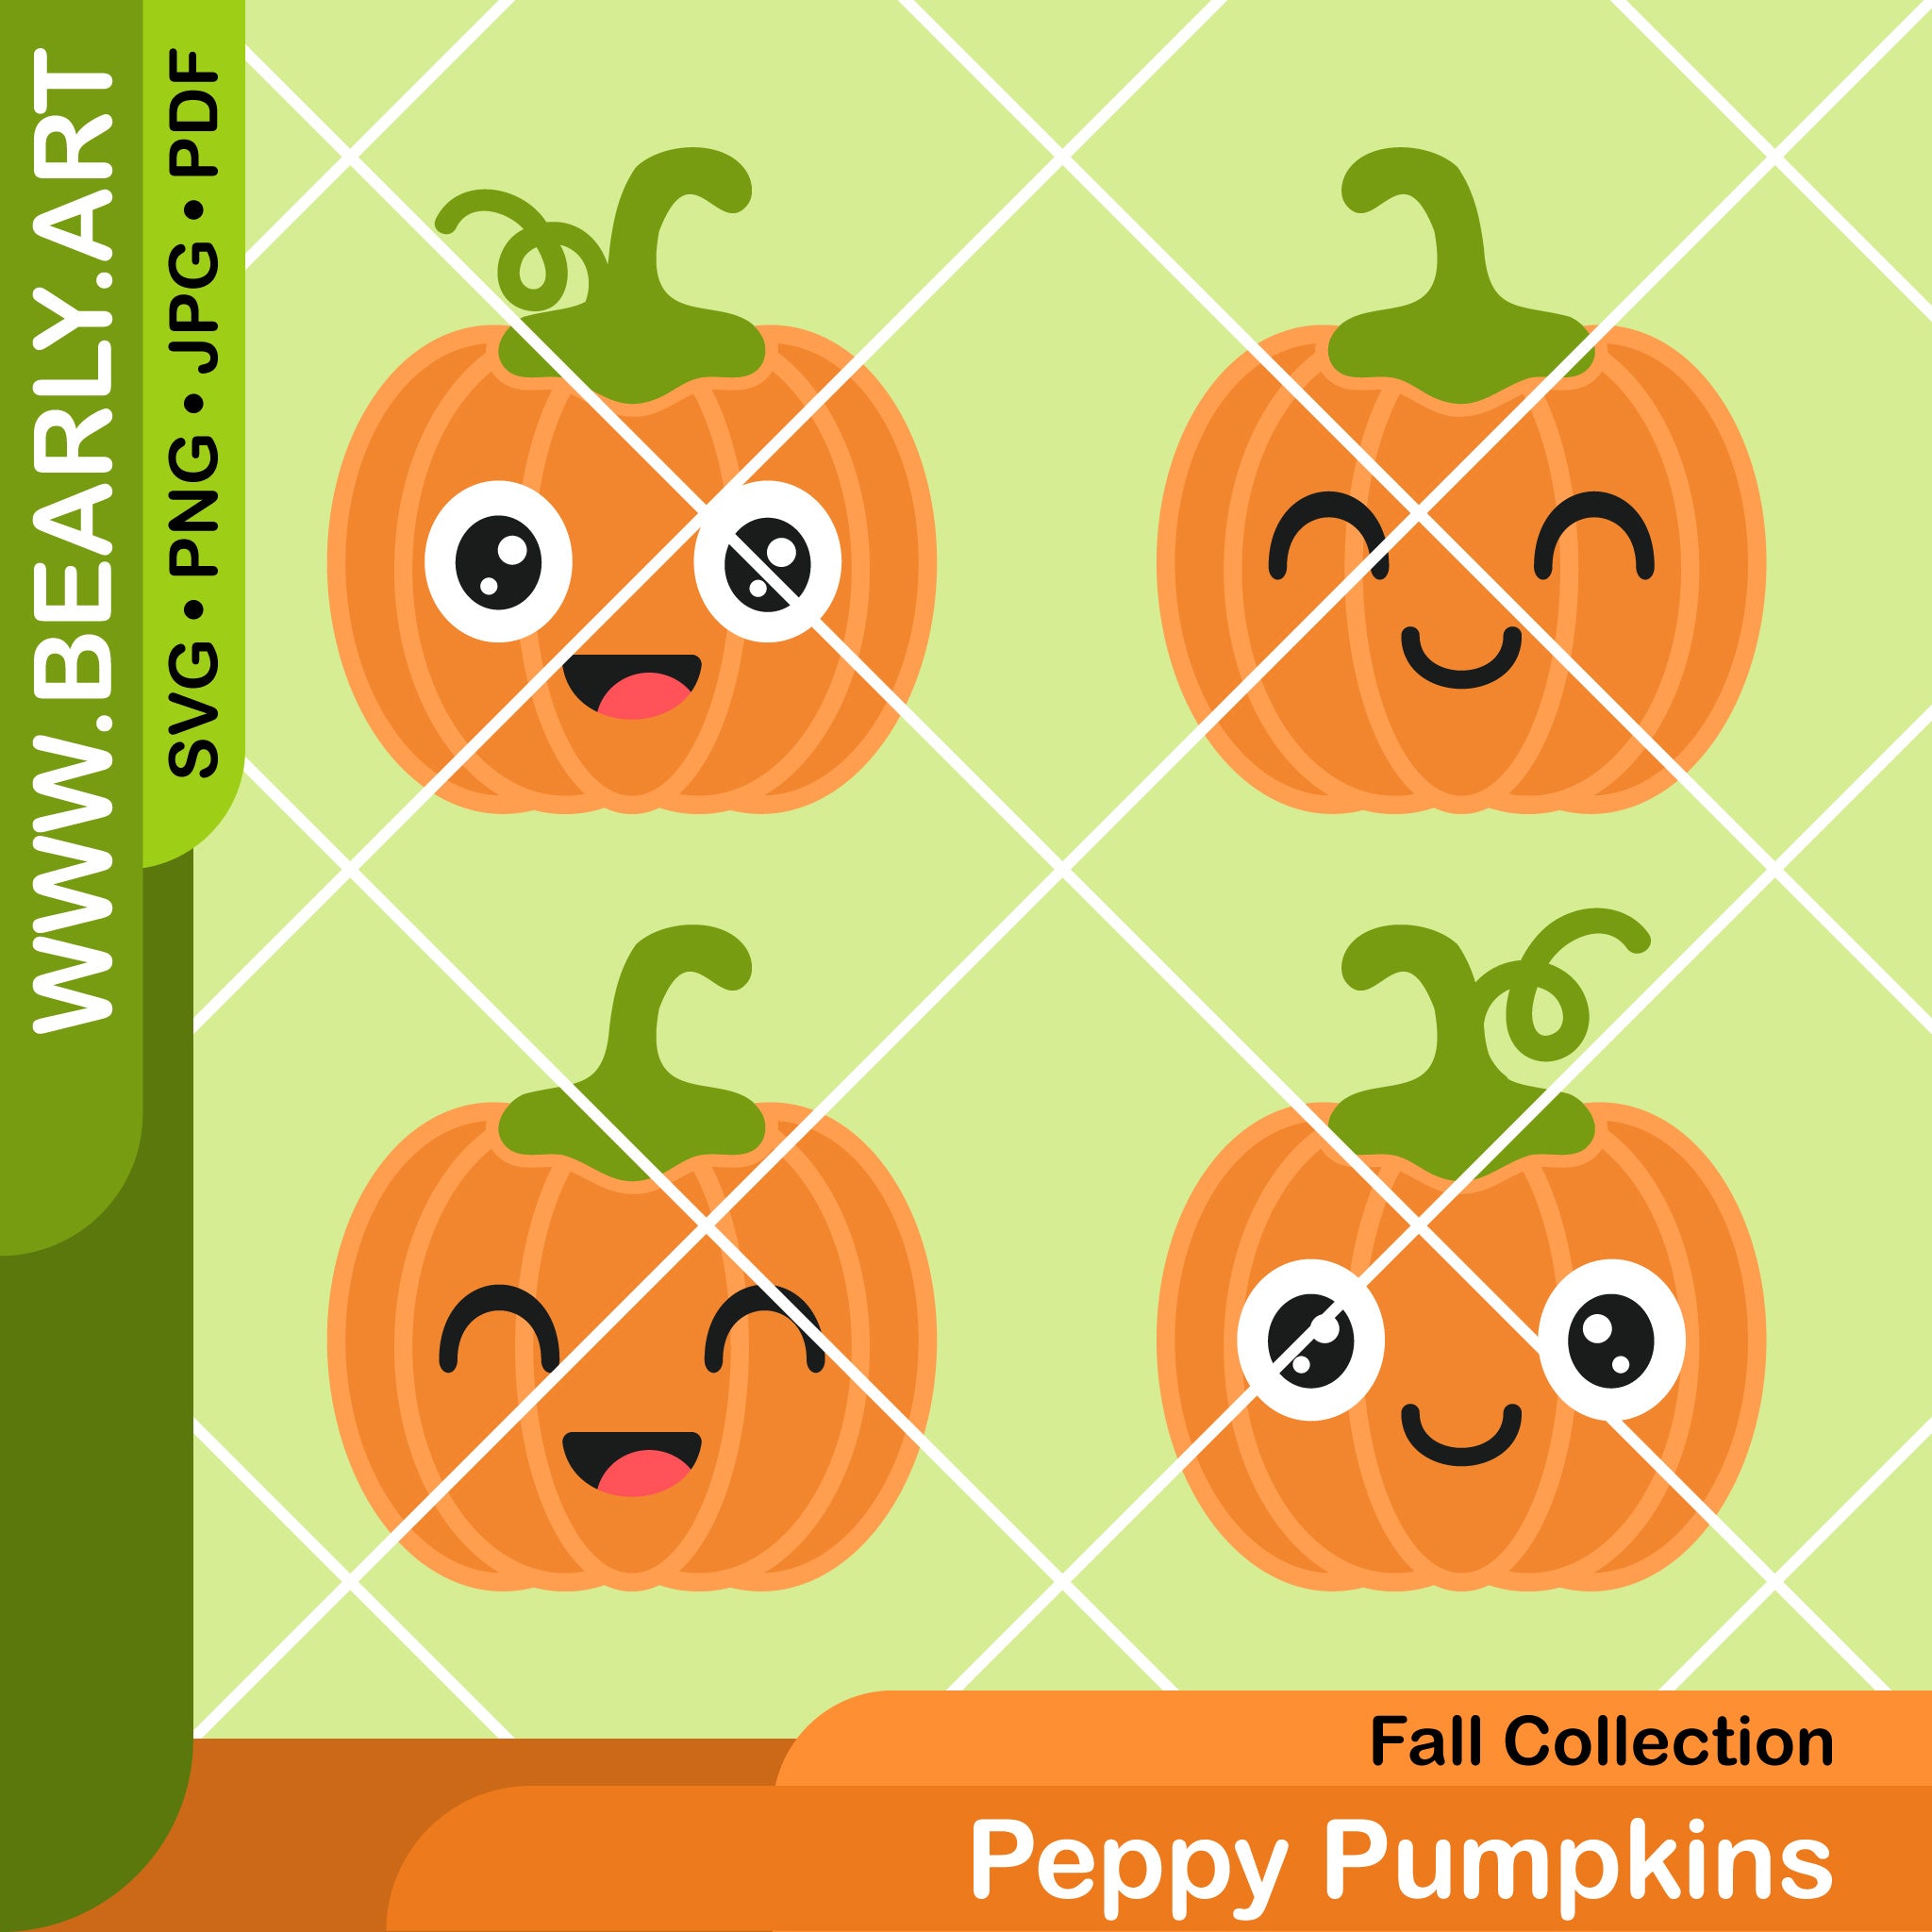 Peppy Pumpkins